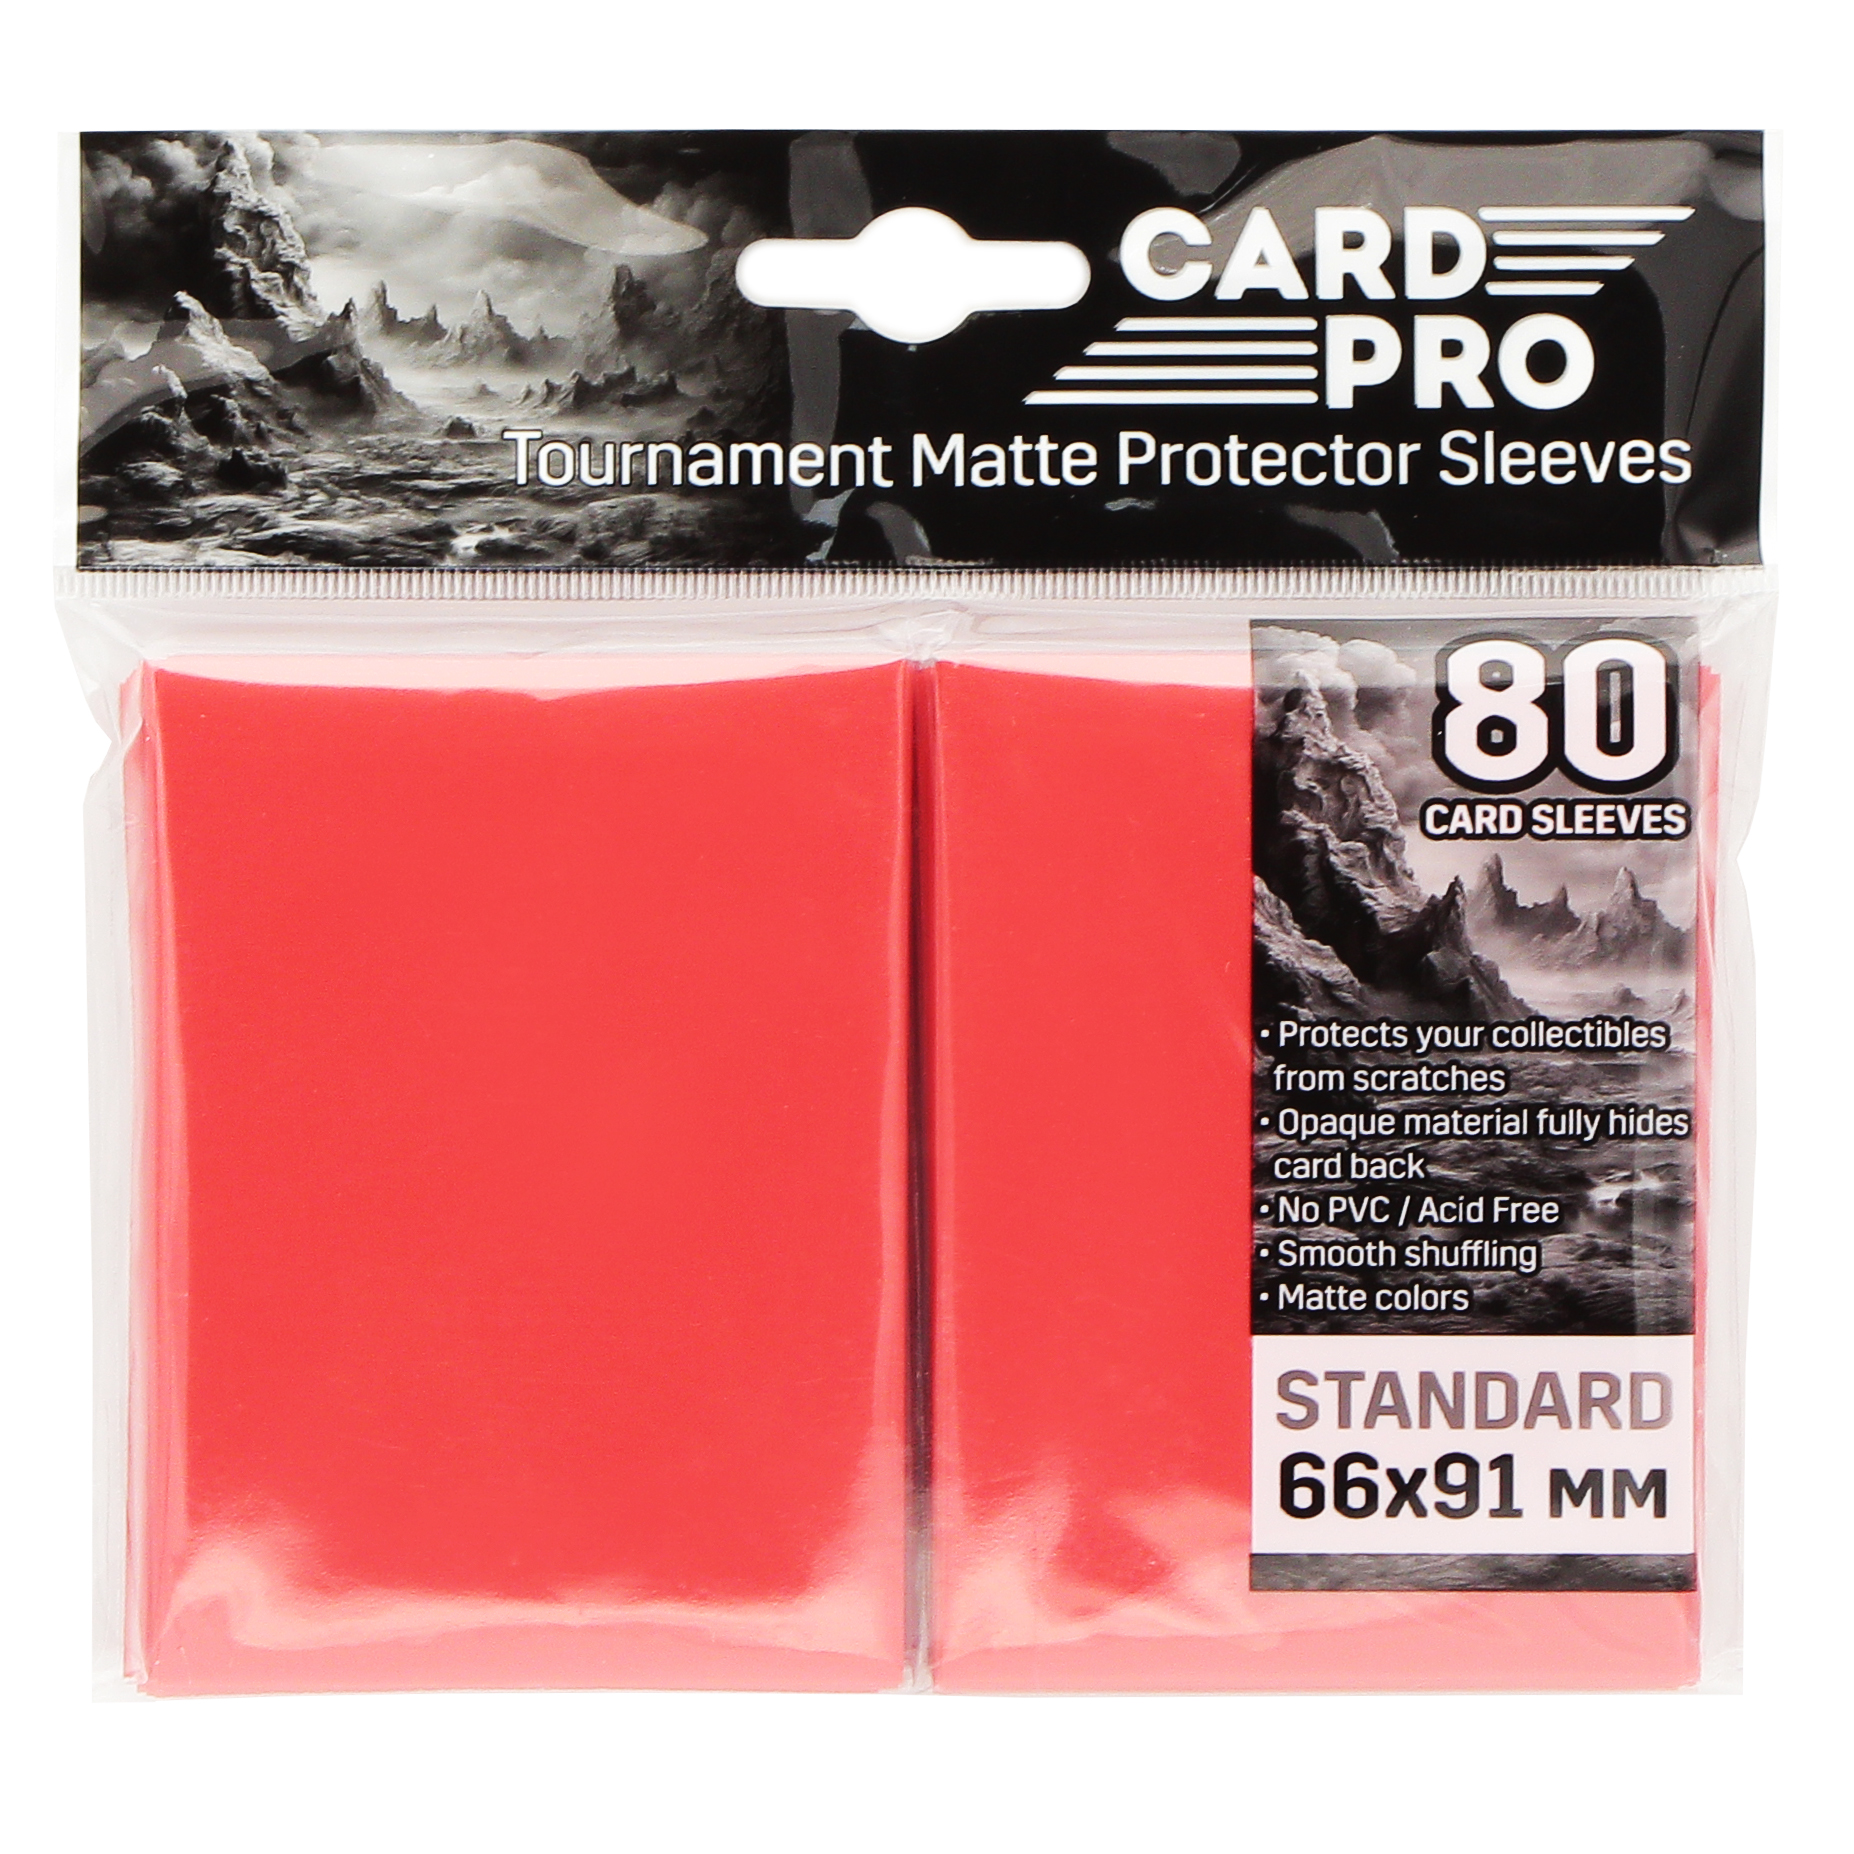 Протекторы для ККИ Card-Pro красные 66x91 мм, 80 шт. datong world car remote key for hyundai tucson 2019 id47 chip 433mhz 95440 d7000 replacement keyless go promixity card